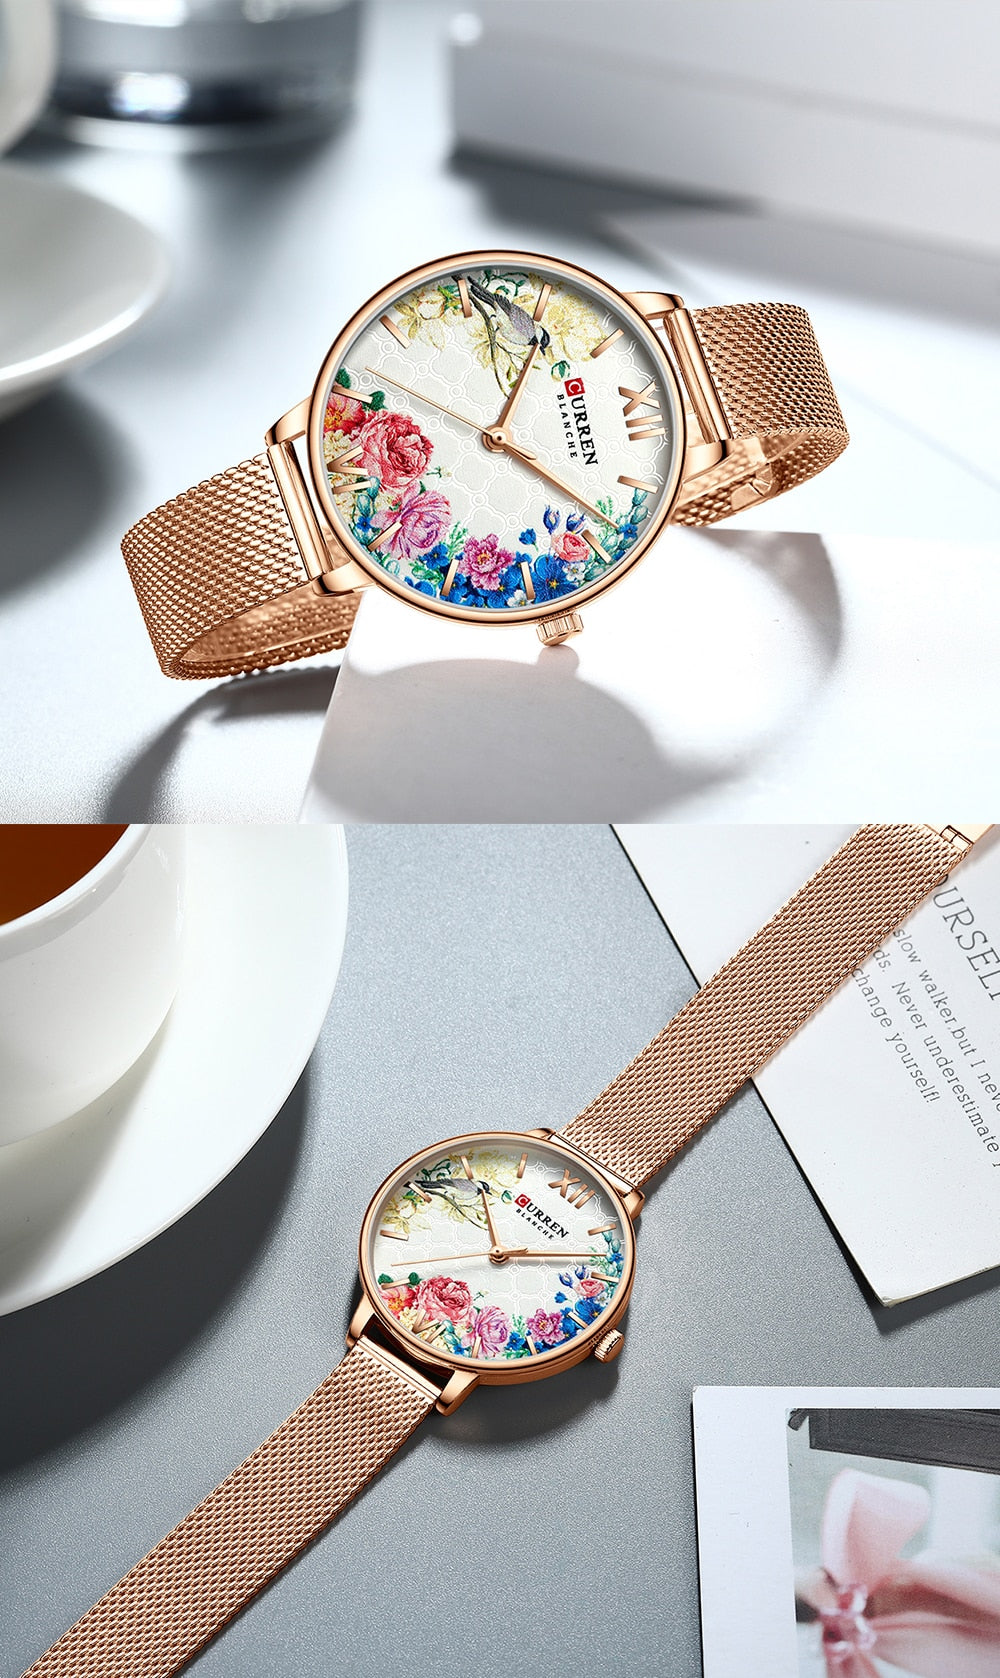 YSYH White Leather Watch for Women Watches Fashion Flower Quartz Wristwatch Female Clock Reloj Mujer Charms Ladies Gift